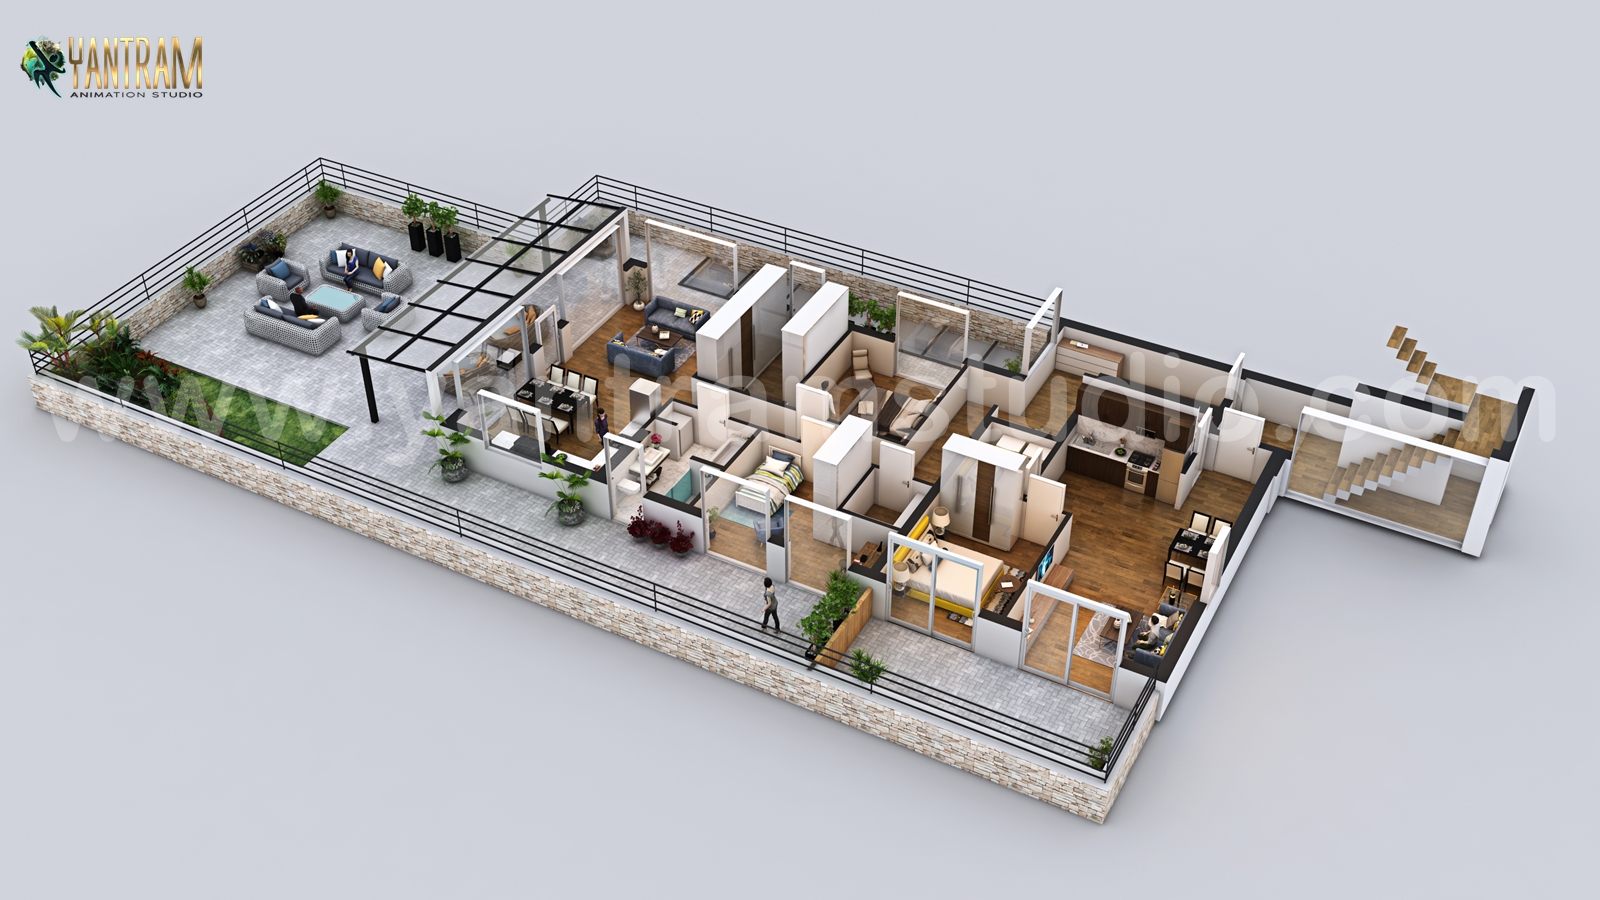 3d floor design of penthouse area by Yantram Architectural Visualisation Studio, Dallas – Texas.